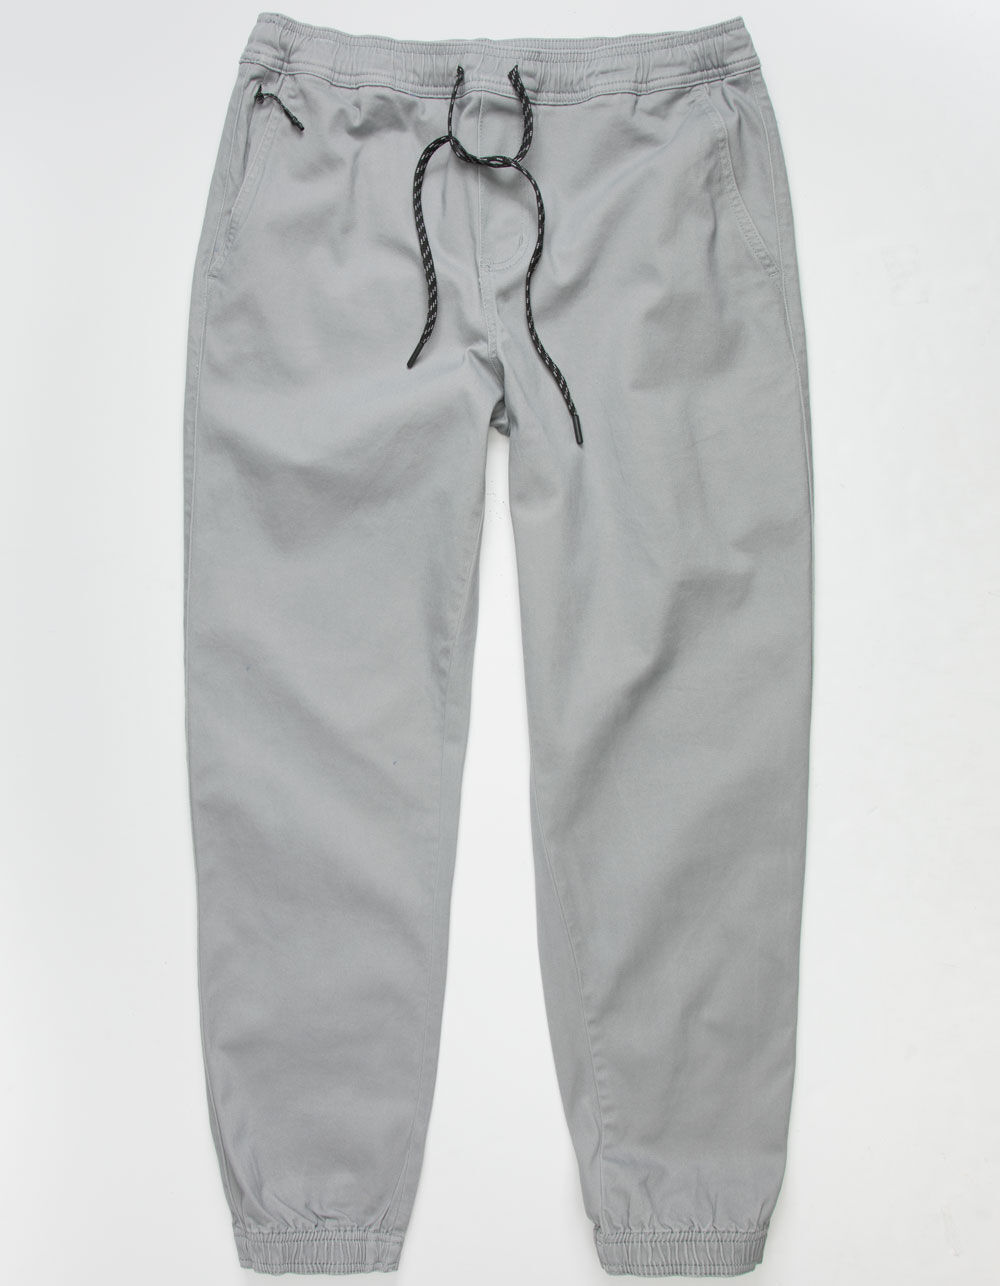 Wholesale Boys Drawstring Twill Uniform Jogger Pants Grey Gray